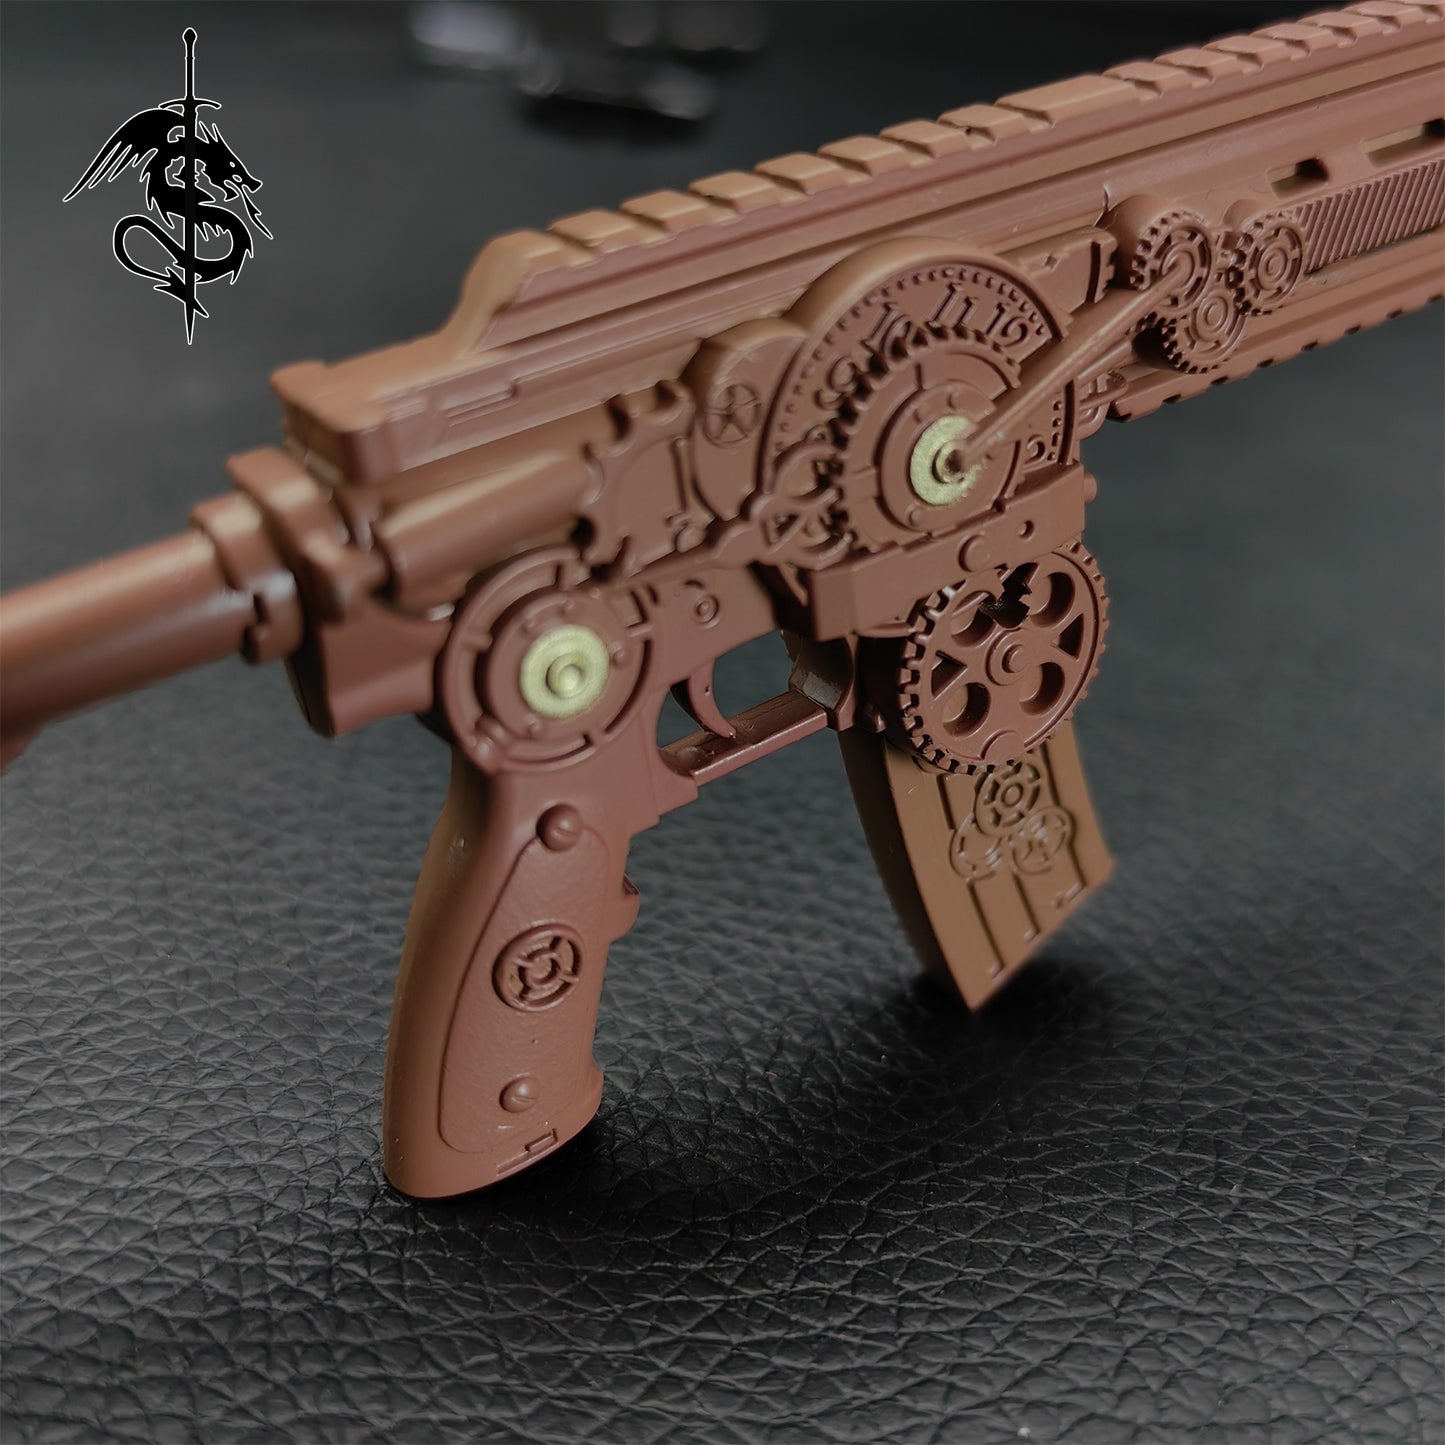 HK416 Miniature Metal Small HK416 Replica 